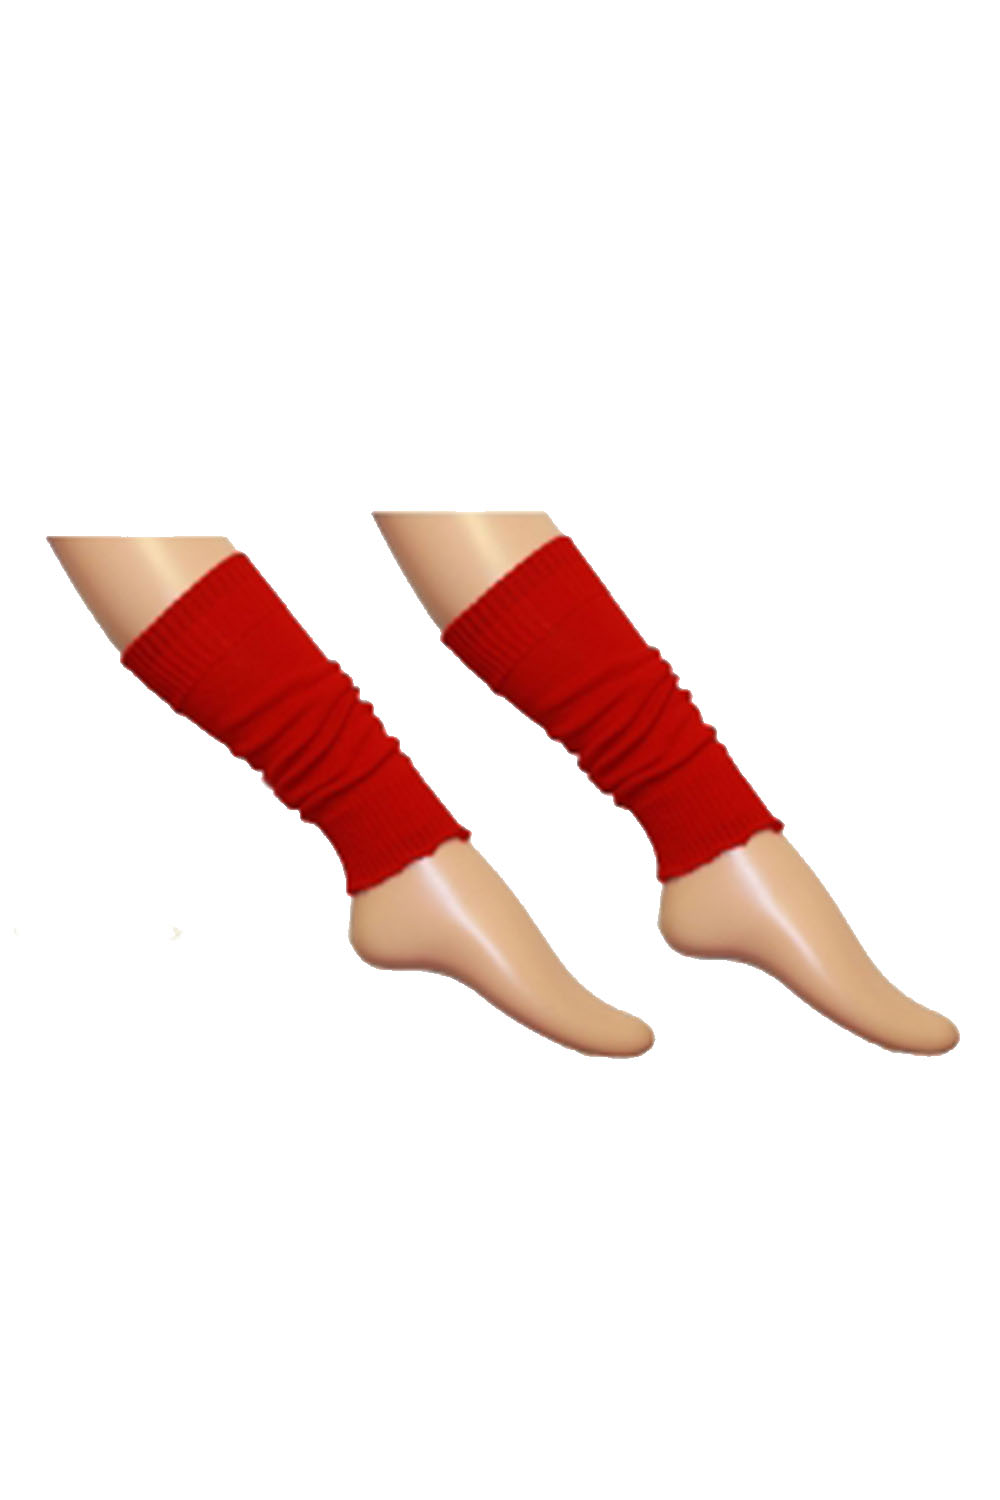 Stirrup Leg Warmers Long Red